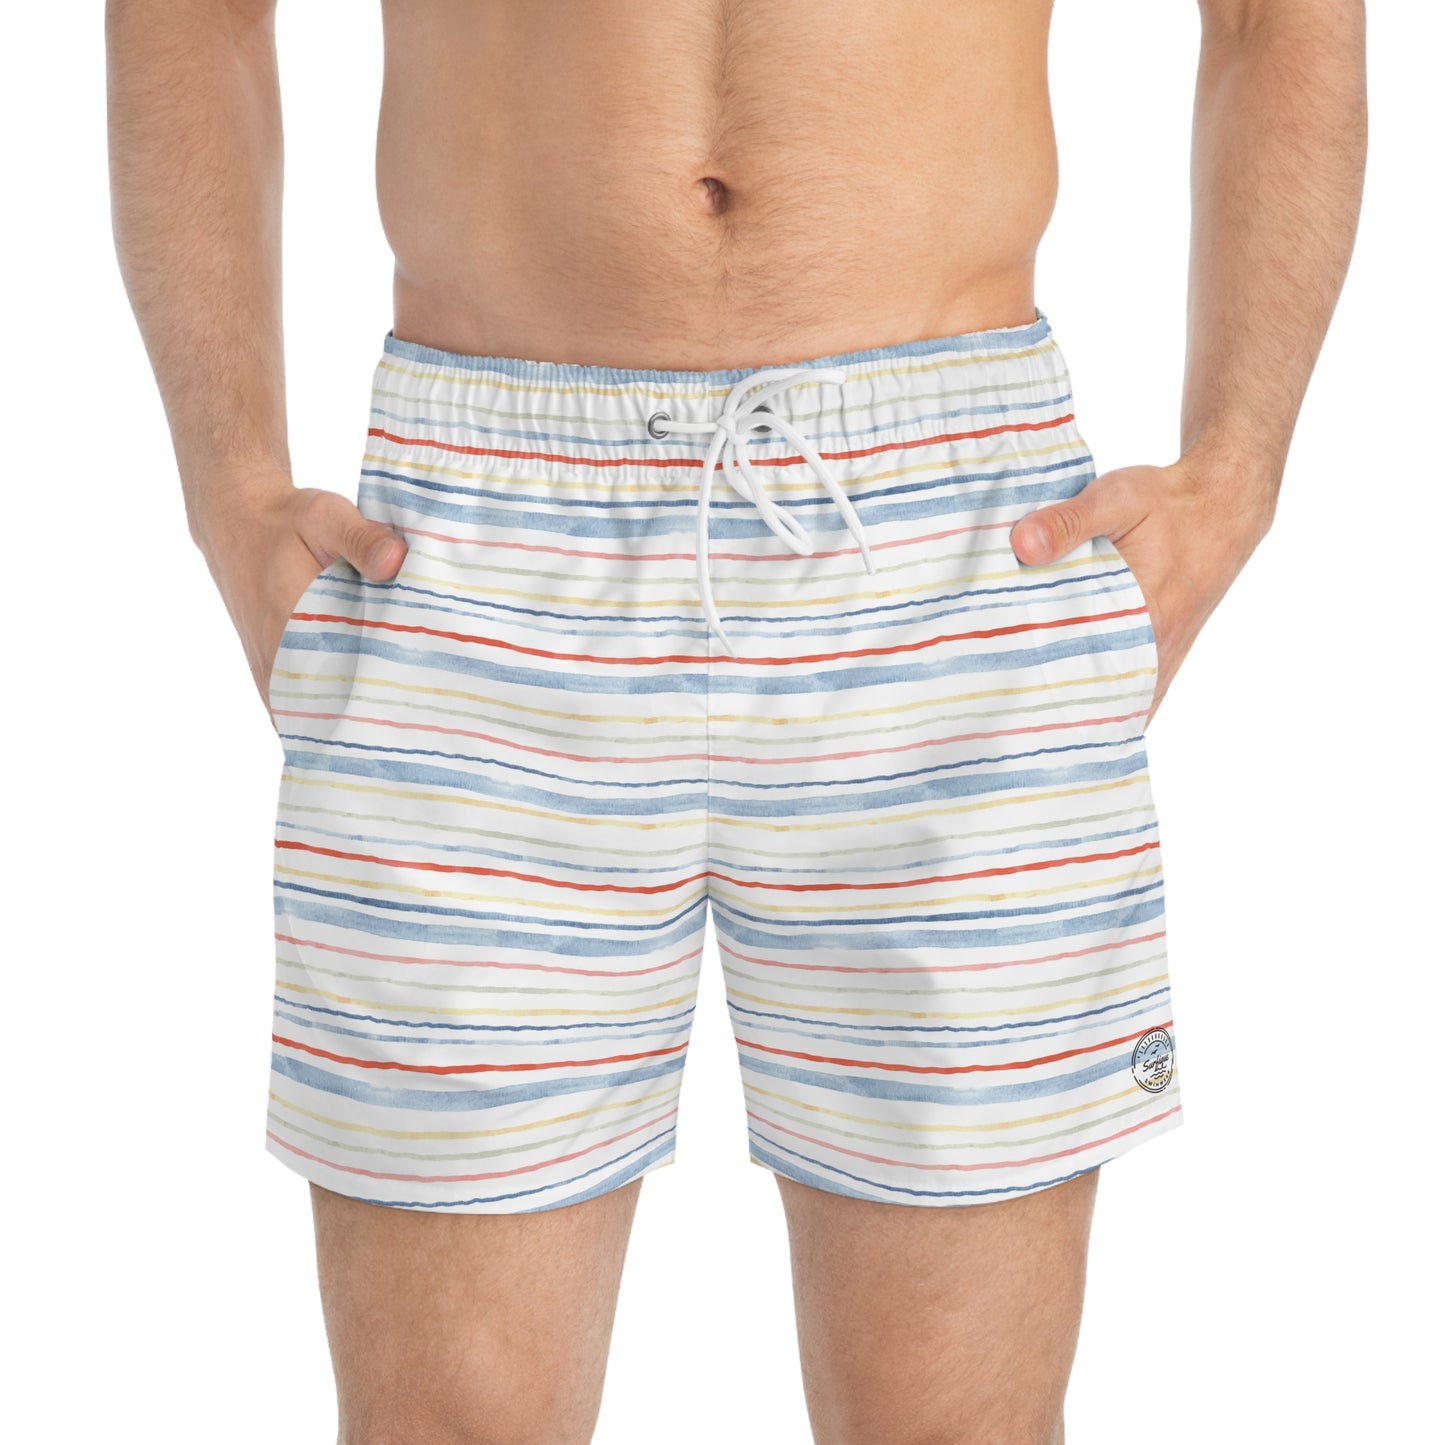 Multicolored Stripes Swimsuit